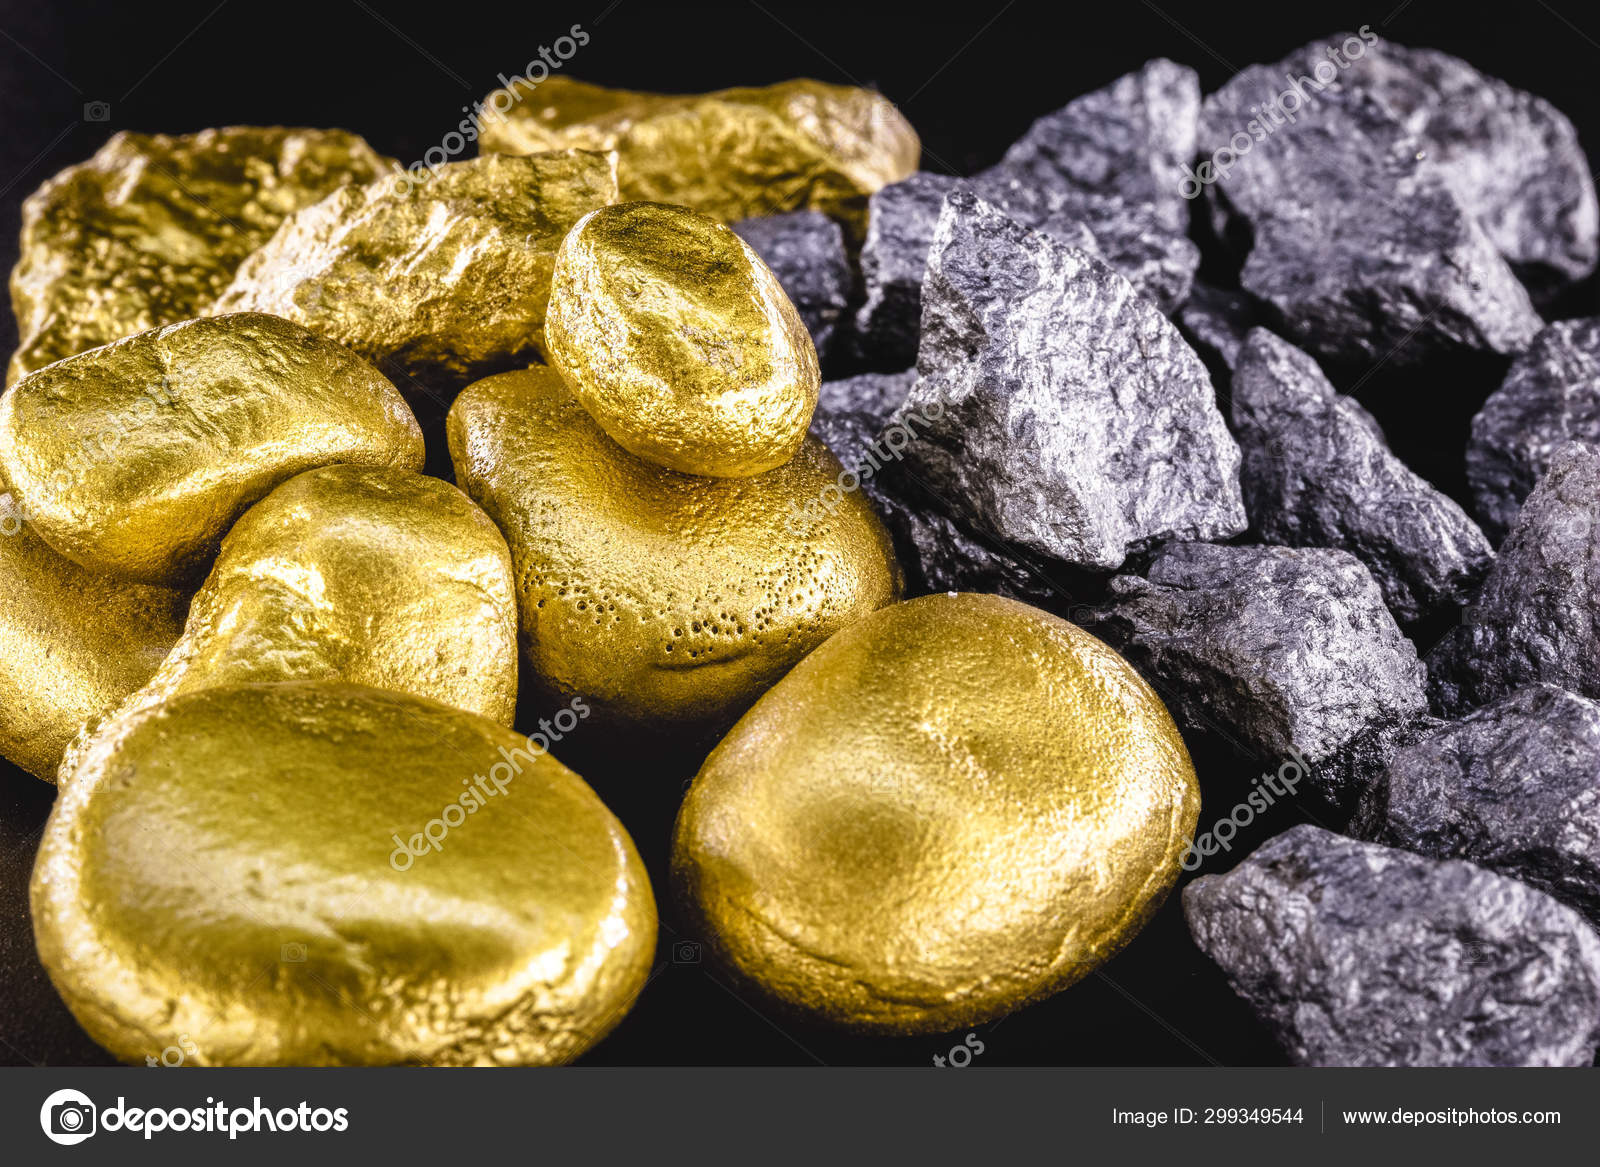 Nugget De Minério De Ouro E Bullion, Rocha De Ouro Ou Pedra, Ativo